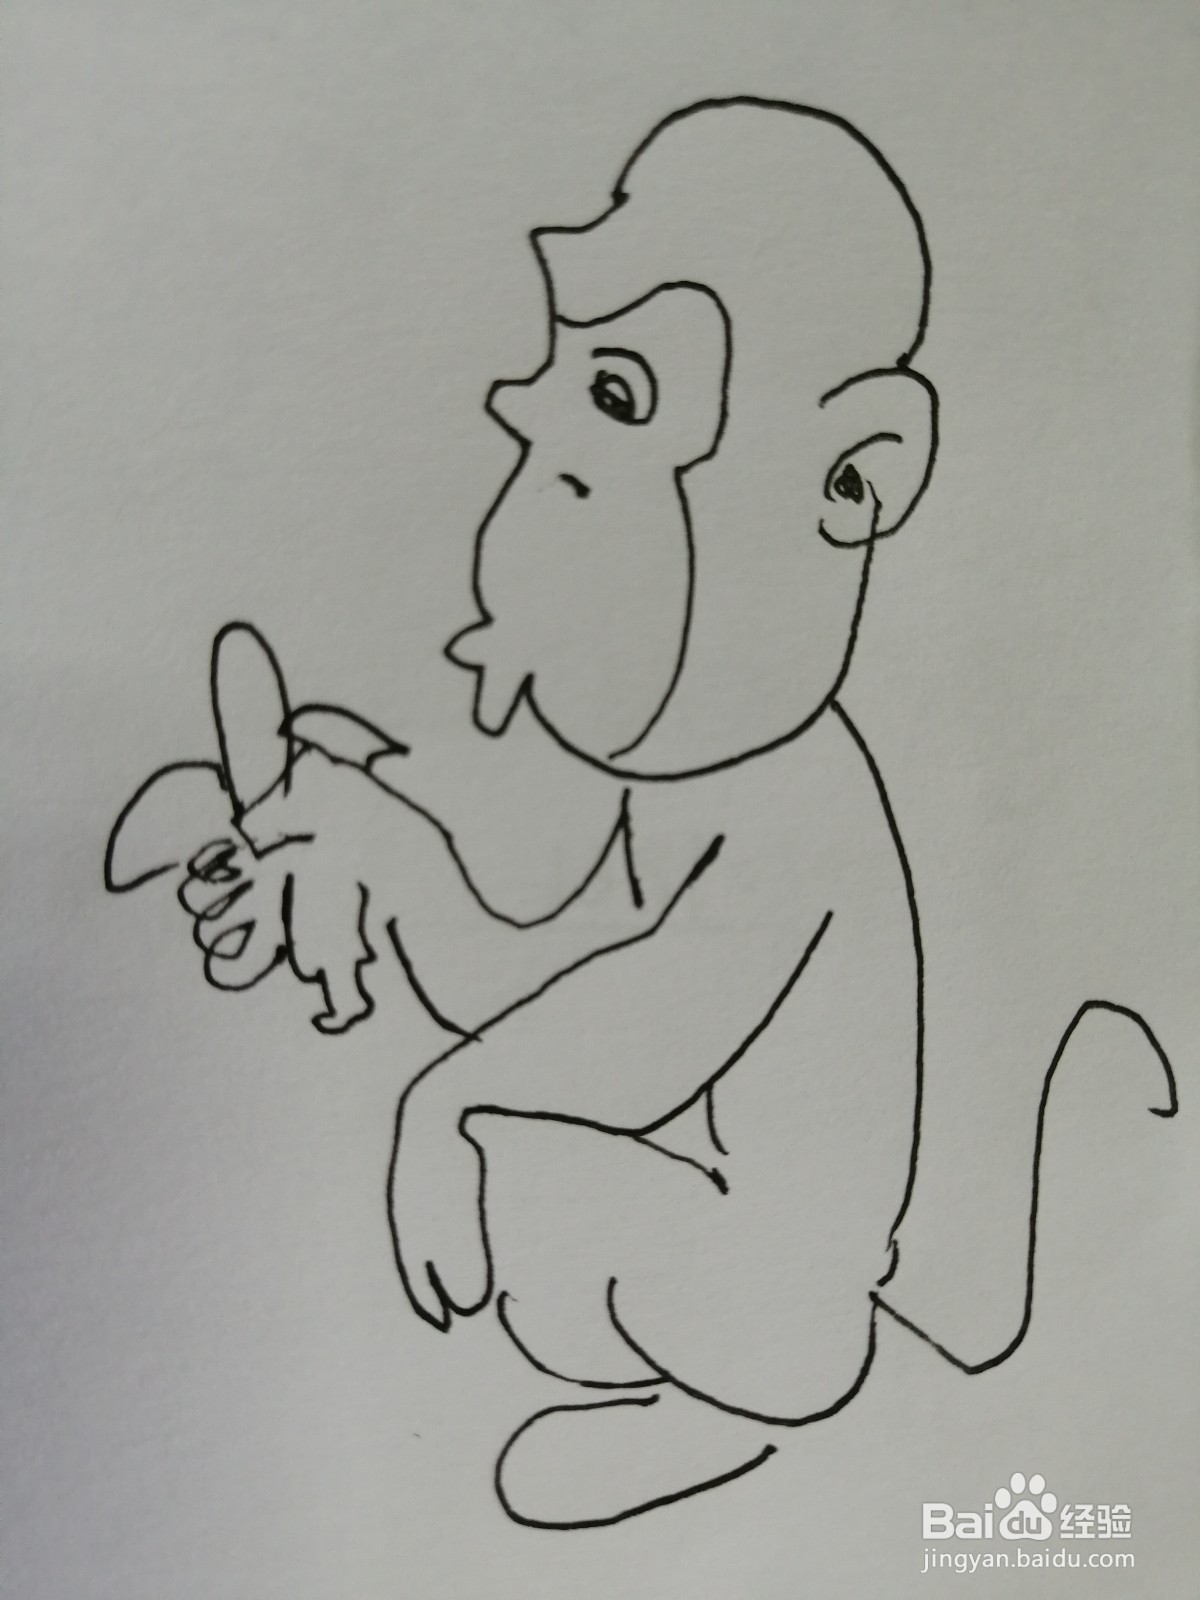 <b>吃香蕉的小猴子怎么画</b>